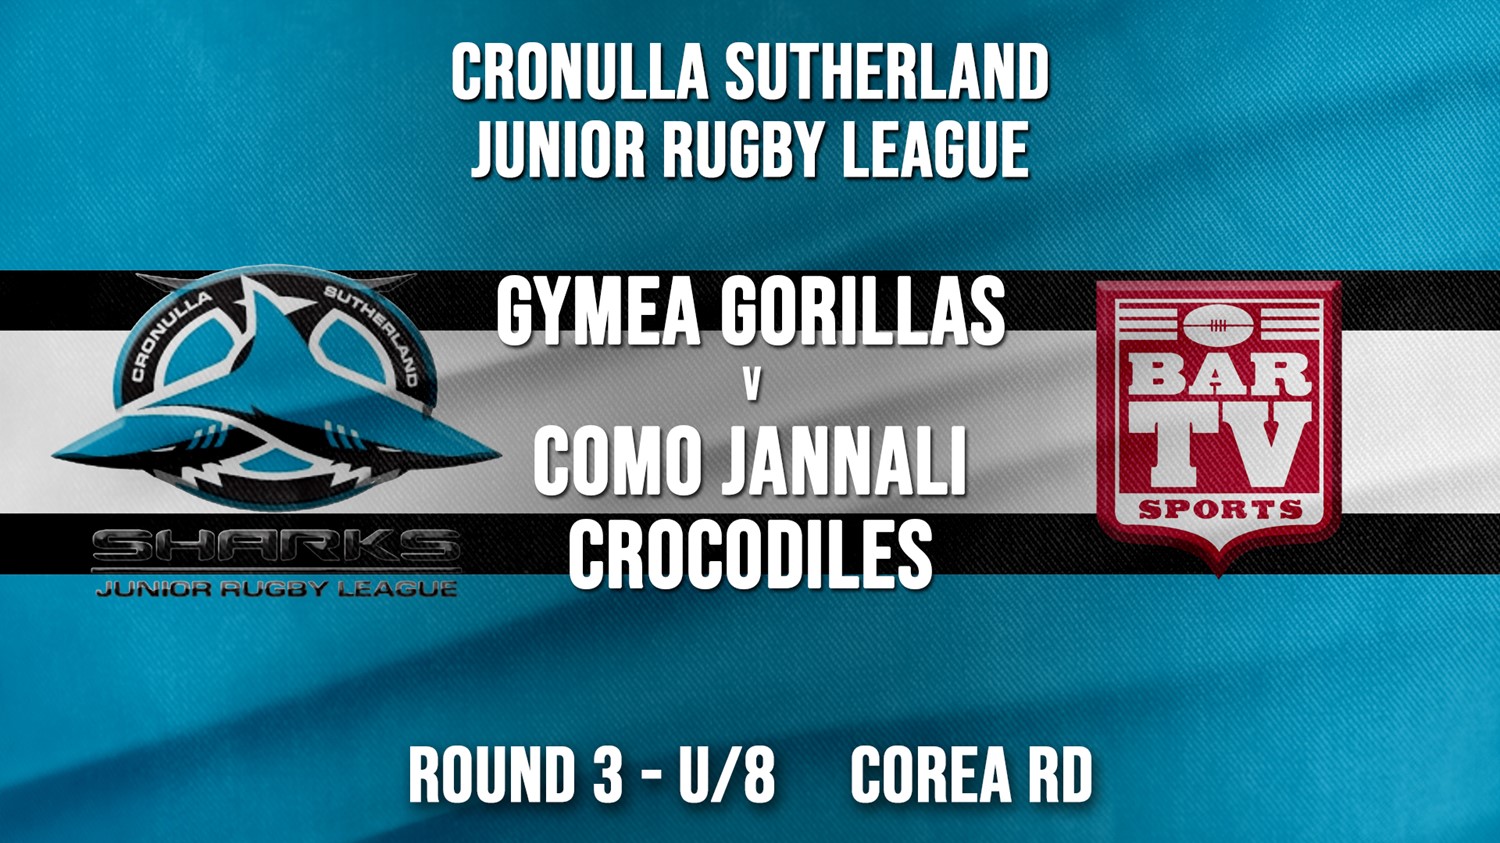 Cronulla JRL Round 3 - U/8 - Gymea Gorillas v Como Jannali Crocodiles Minigame Slate Image